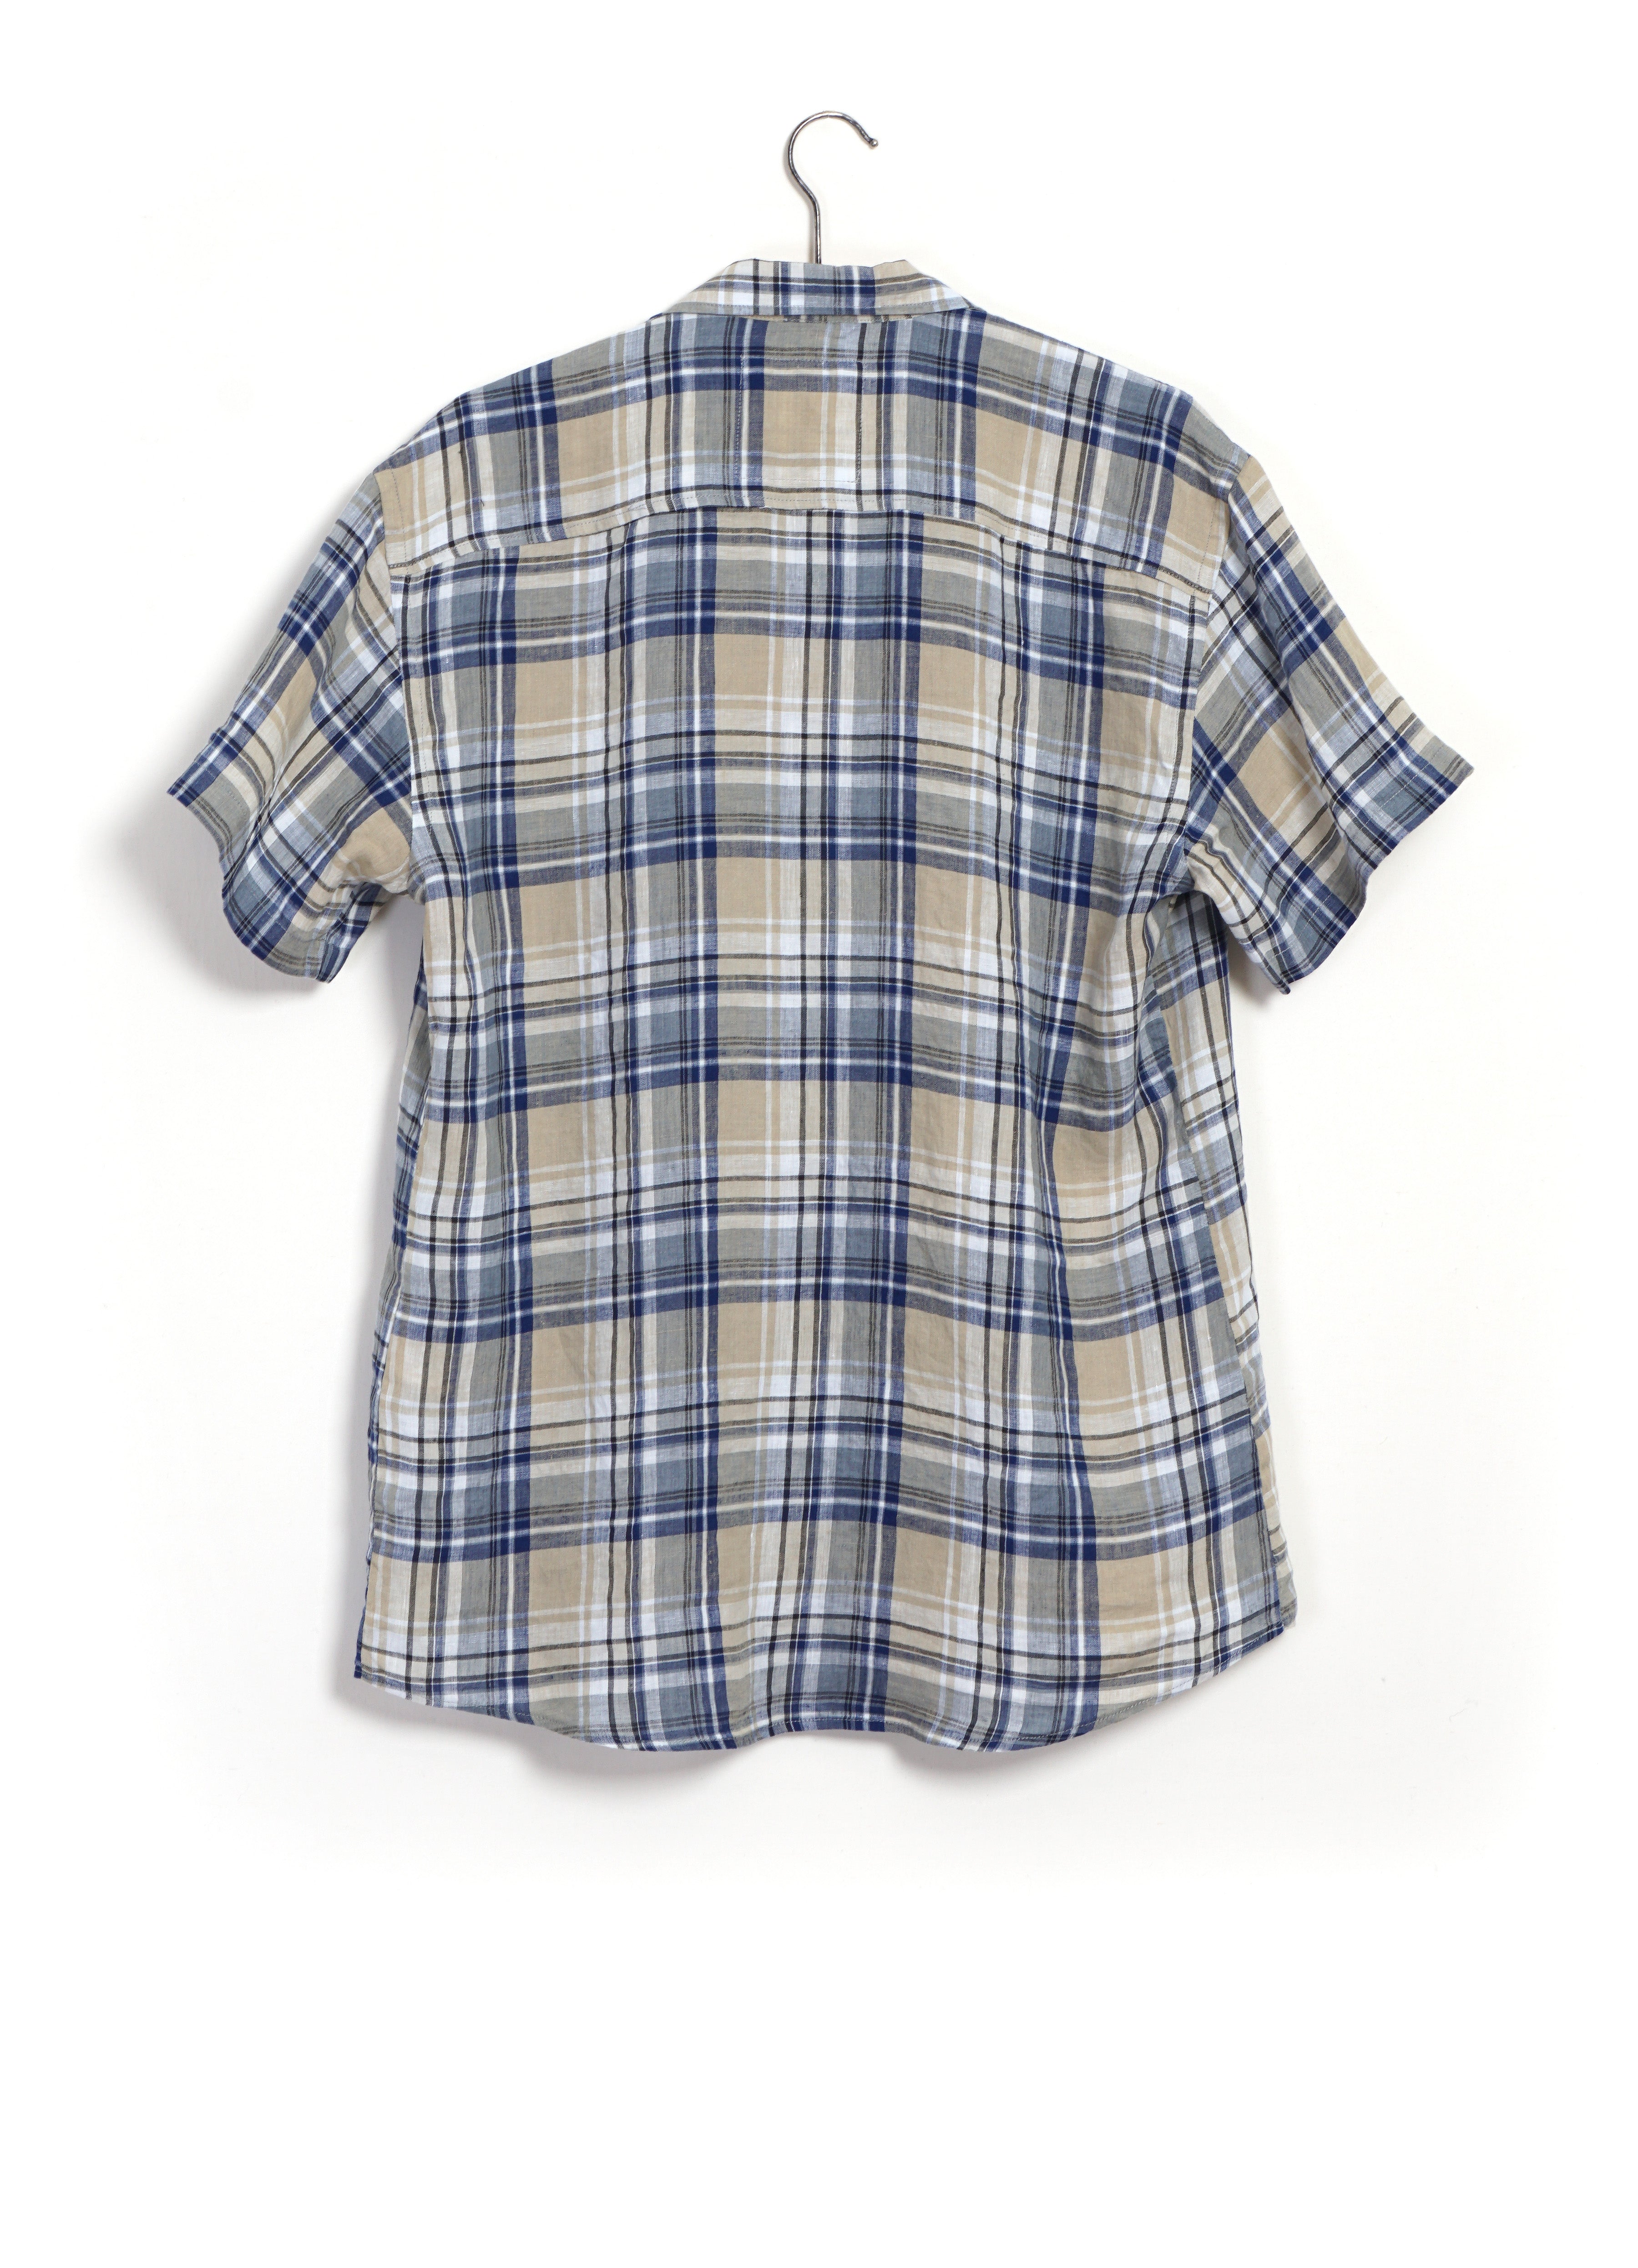 JONNY | Short Sleeve Shirt | Big Blue Checks